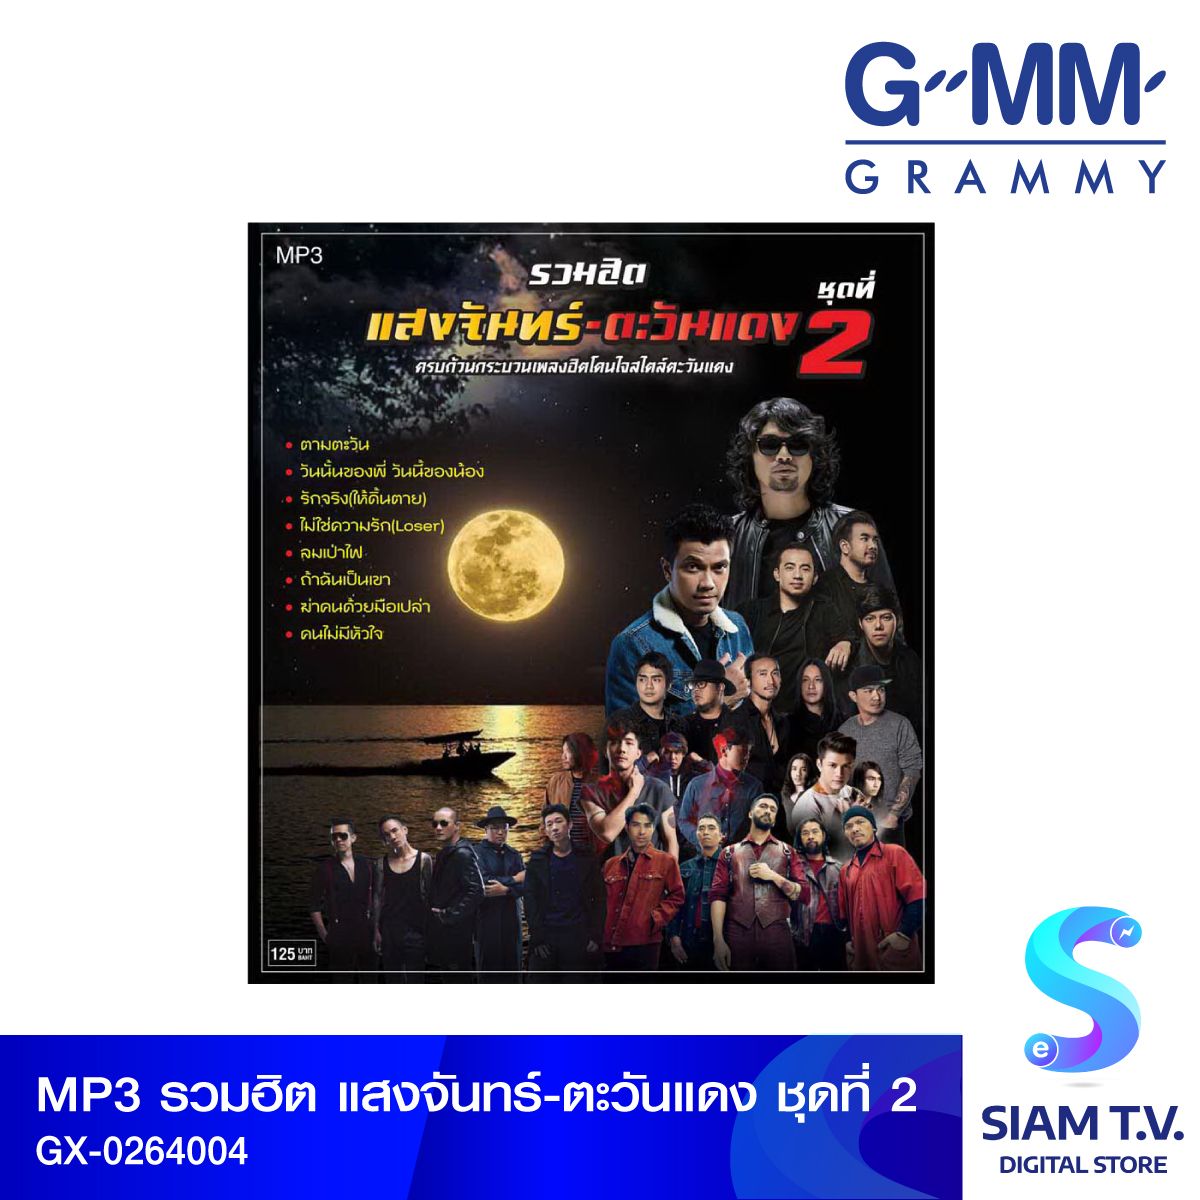 GMM GRAMMY MP3รวมฮิต แสงจันทร์-ตะวันแดง ชุดที่2